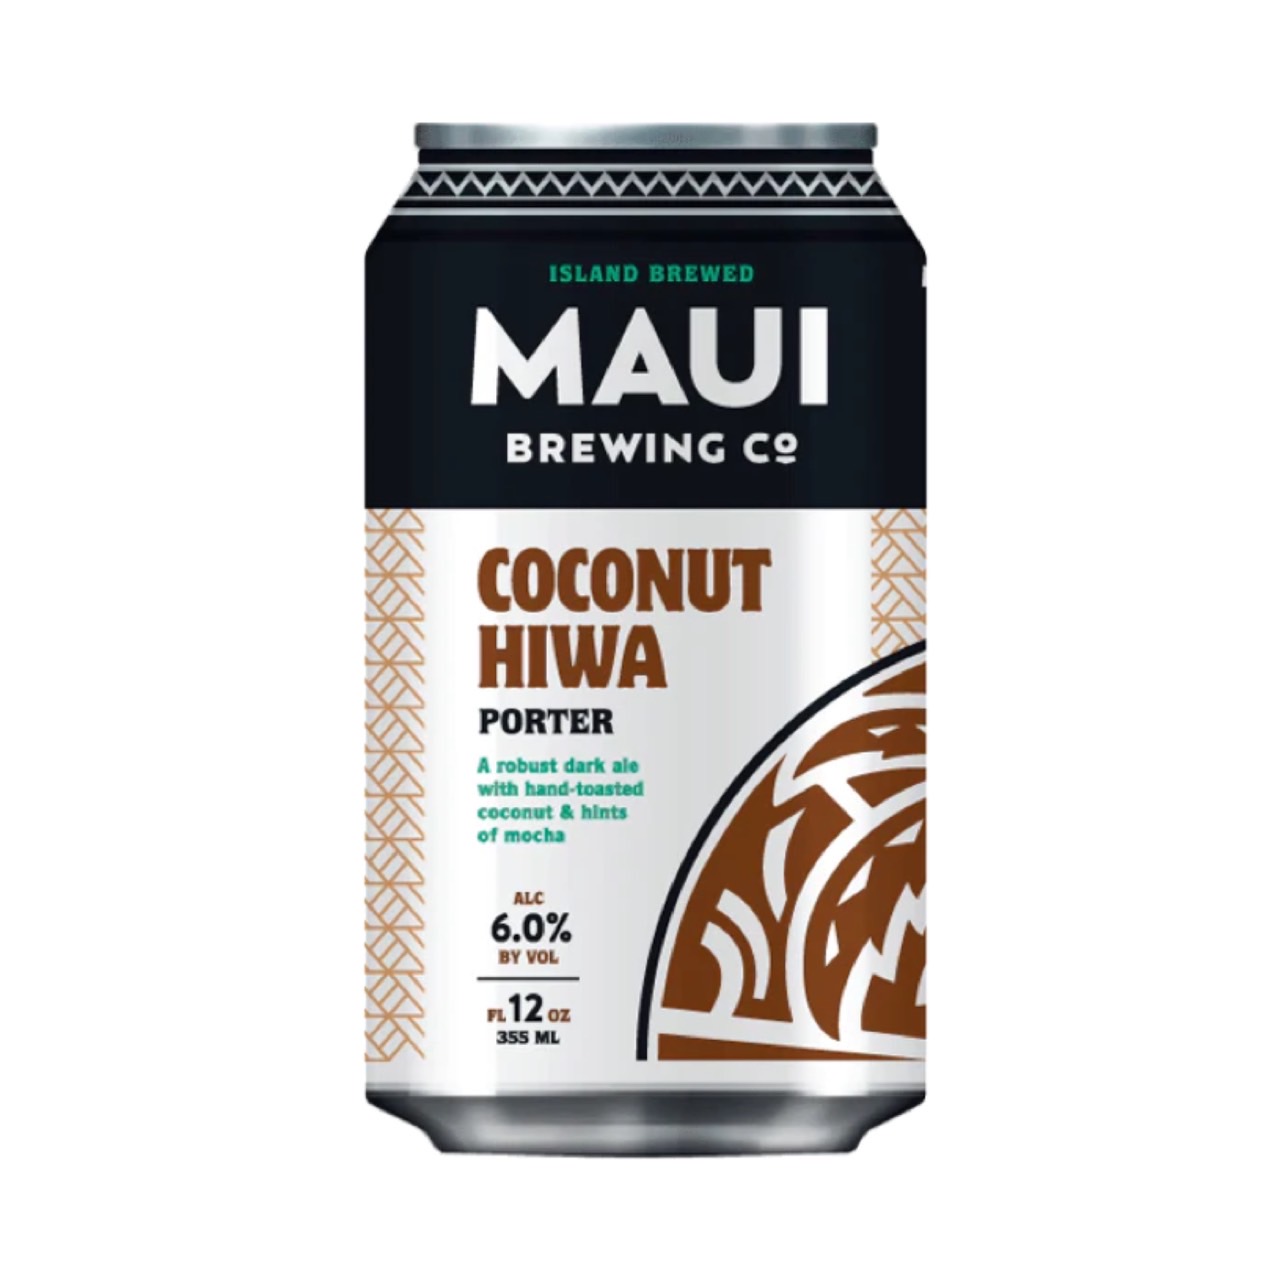 ☆Coconut Hiwa Porter/Maui Brewing